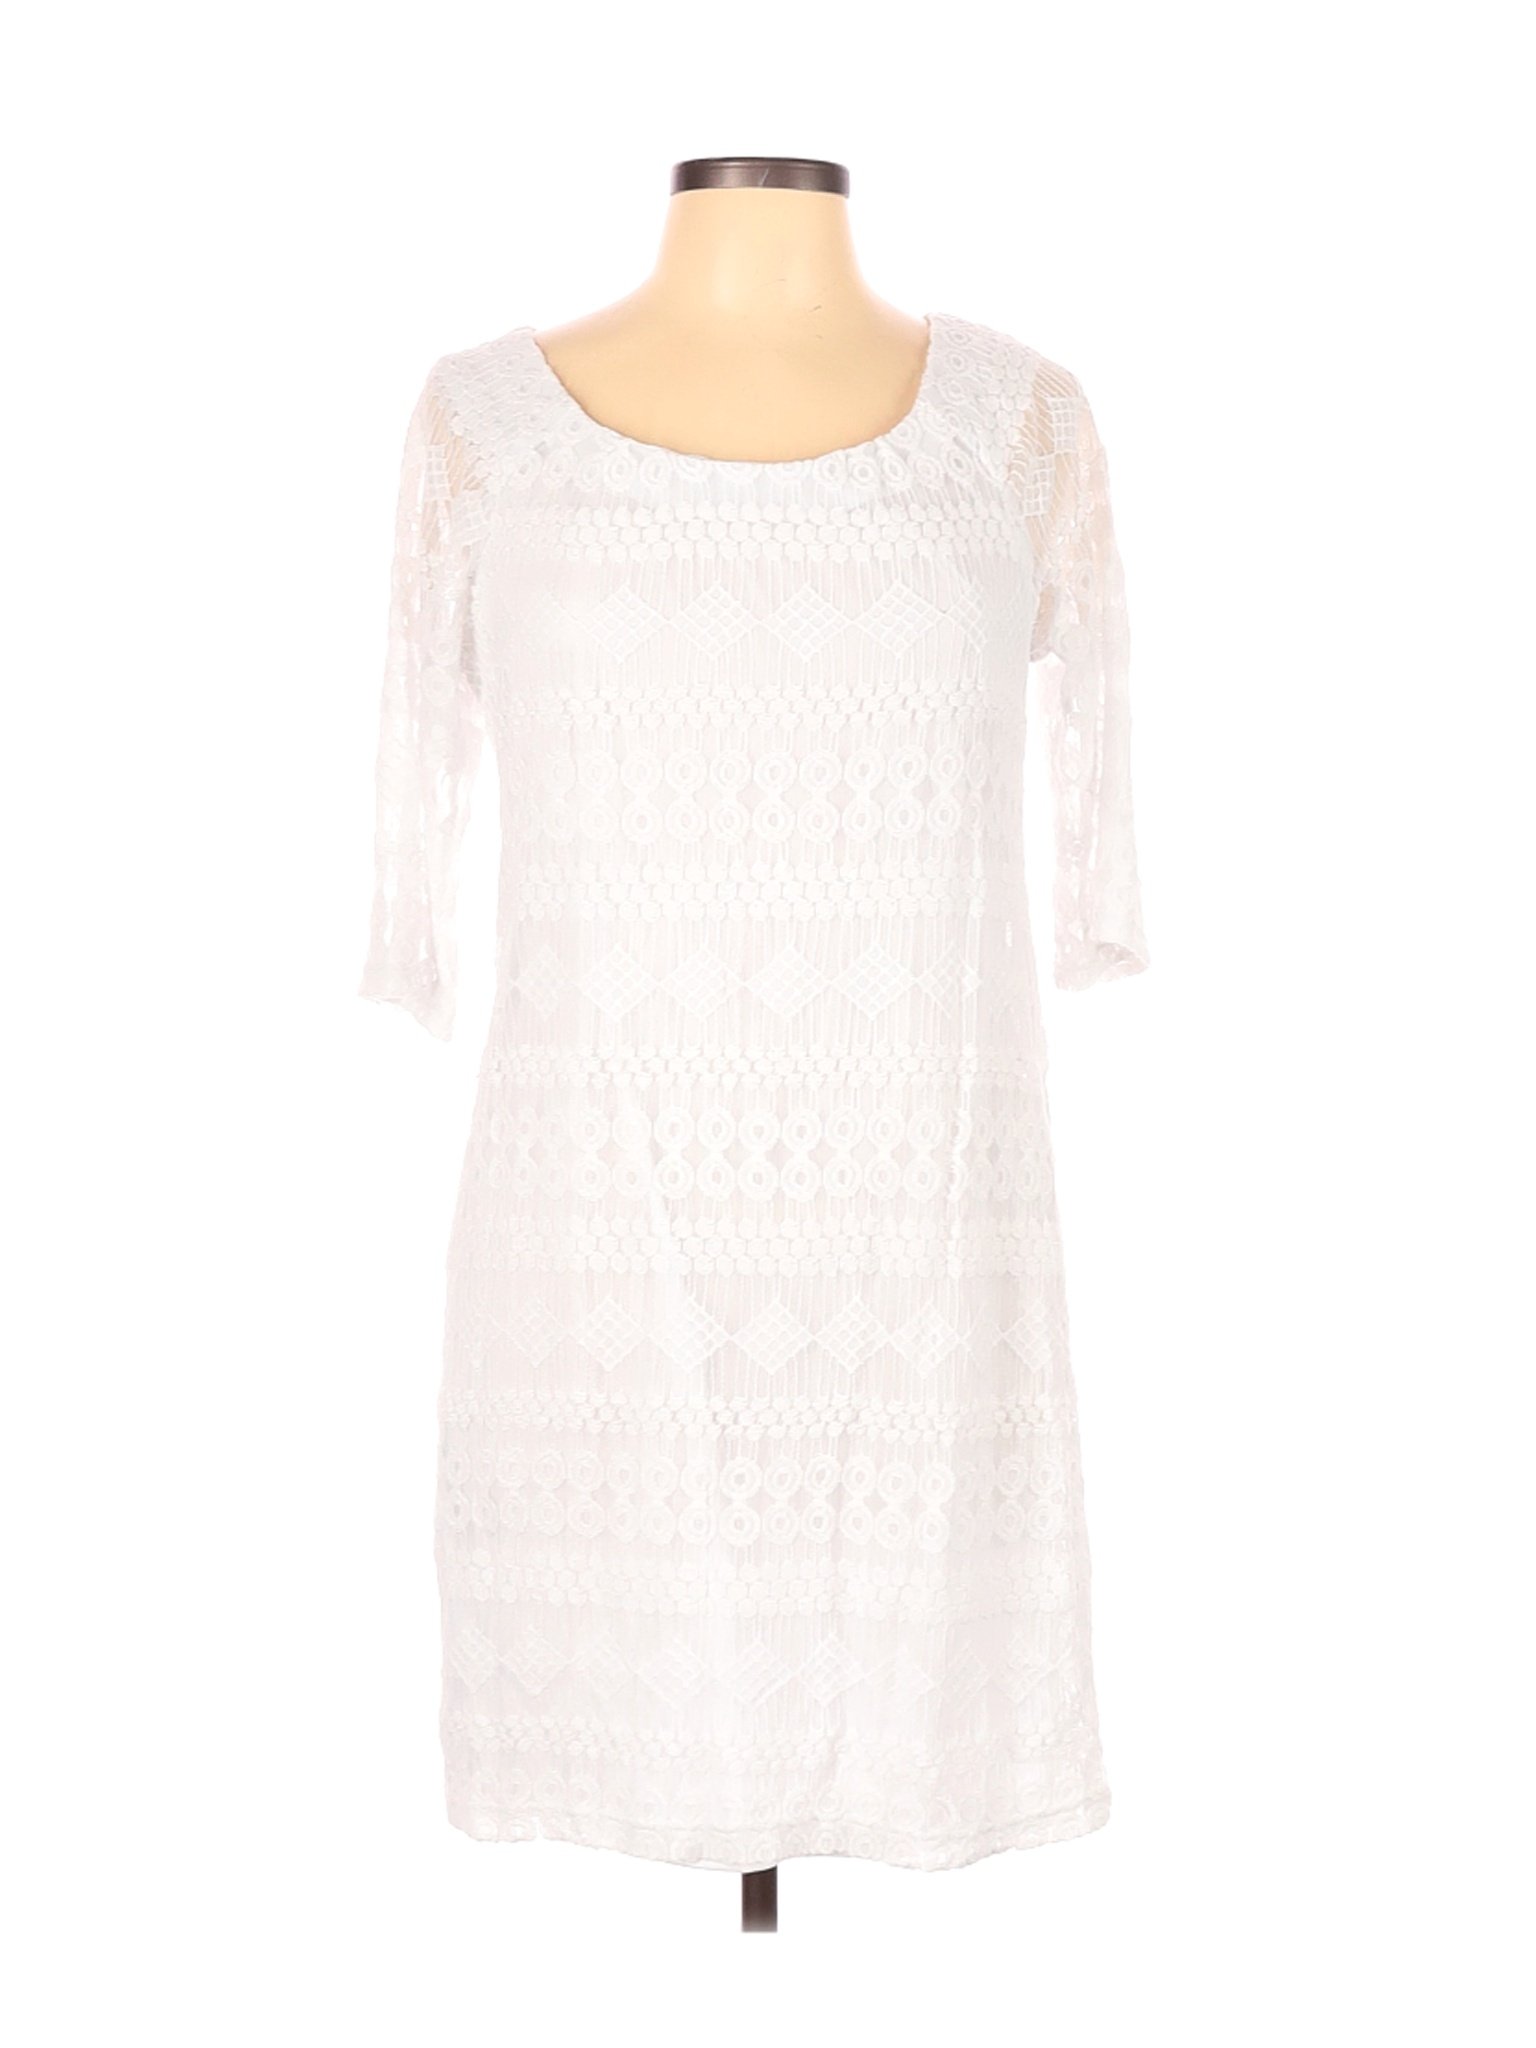 Rabbit Rabbit Rabbit Designs Women White Casual Dress L | eBay